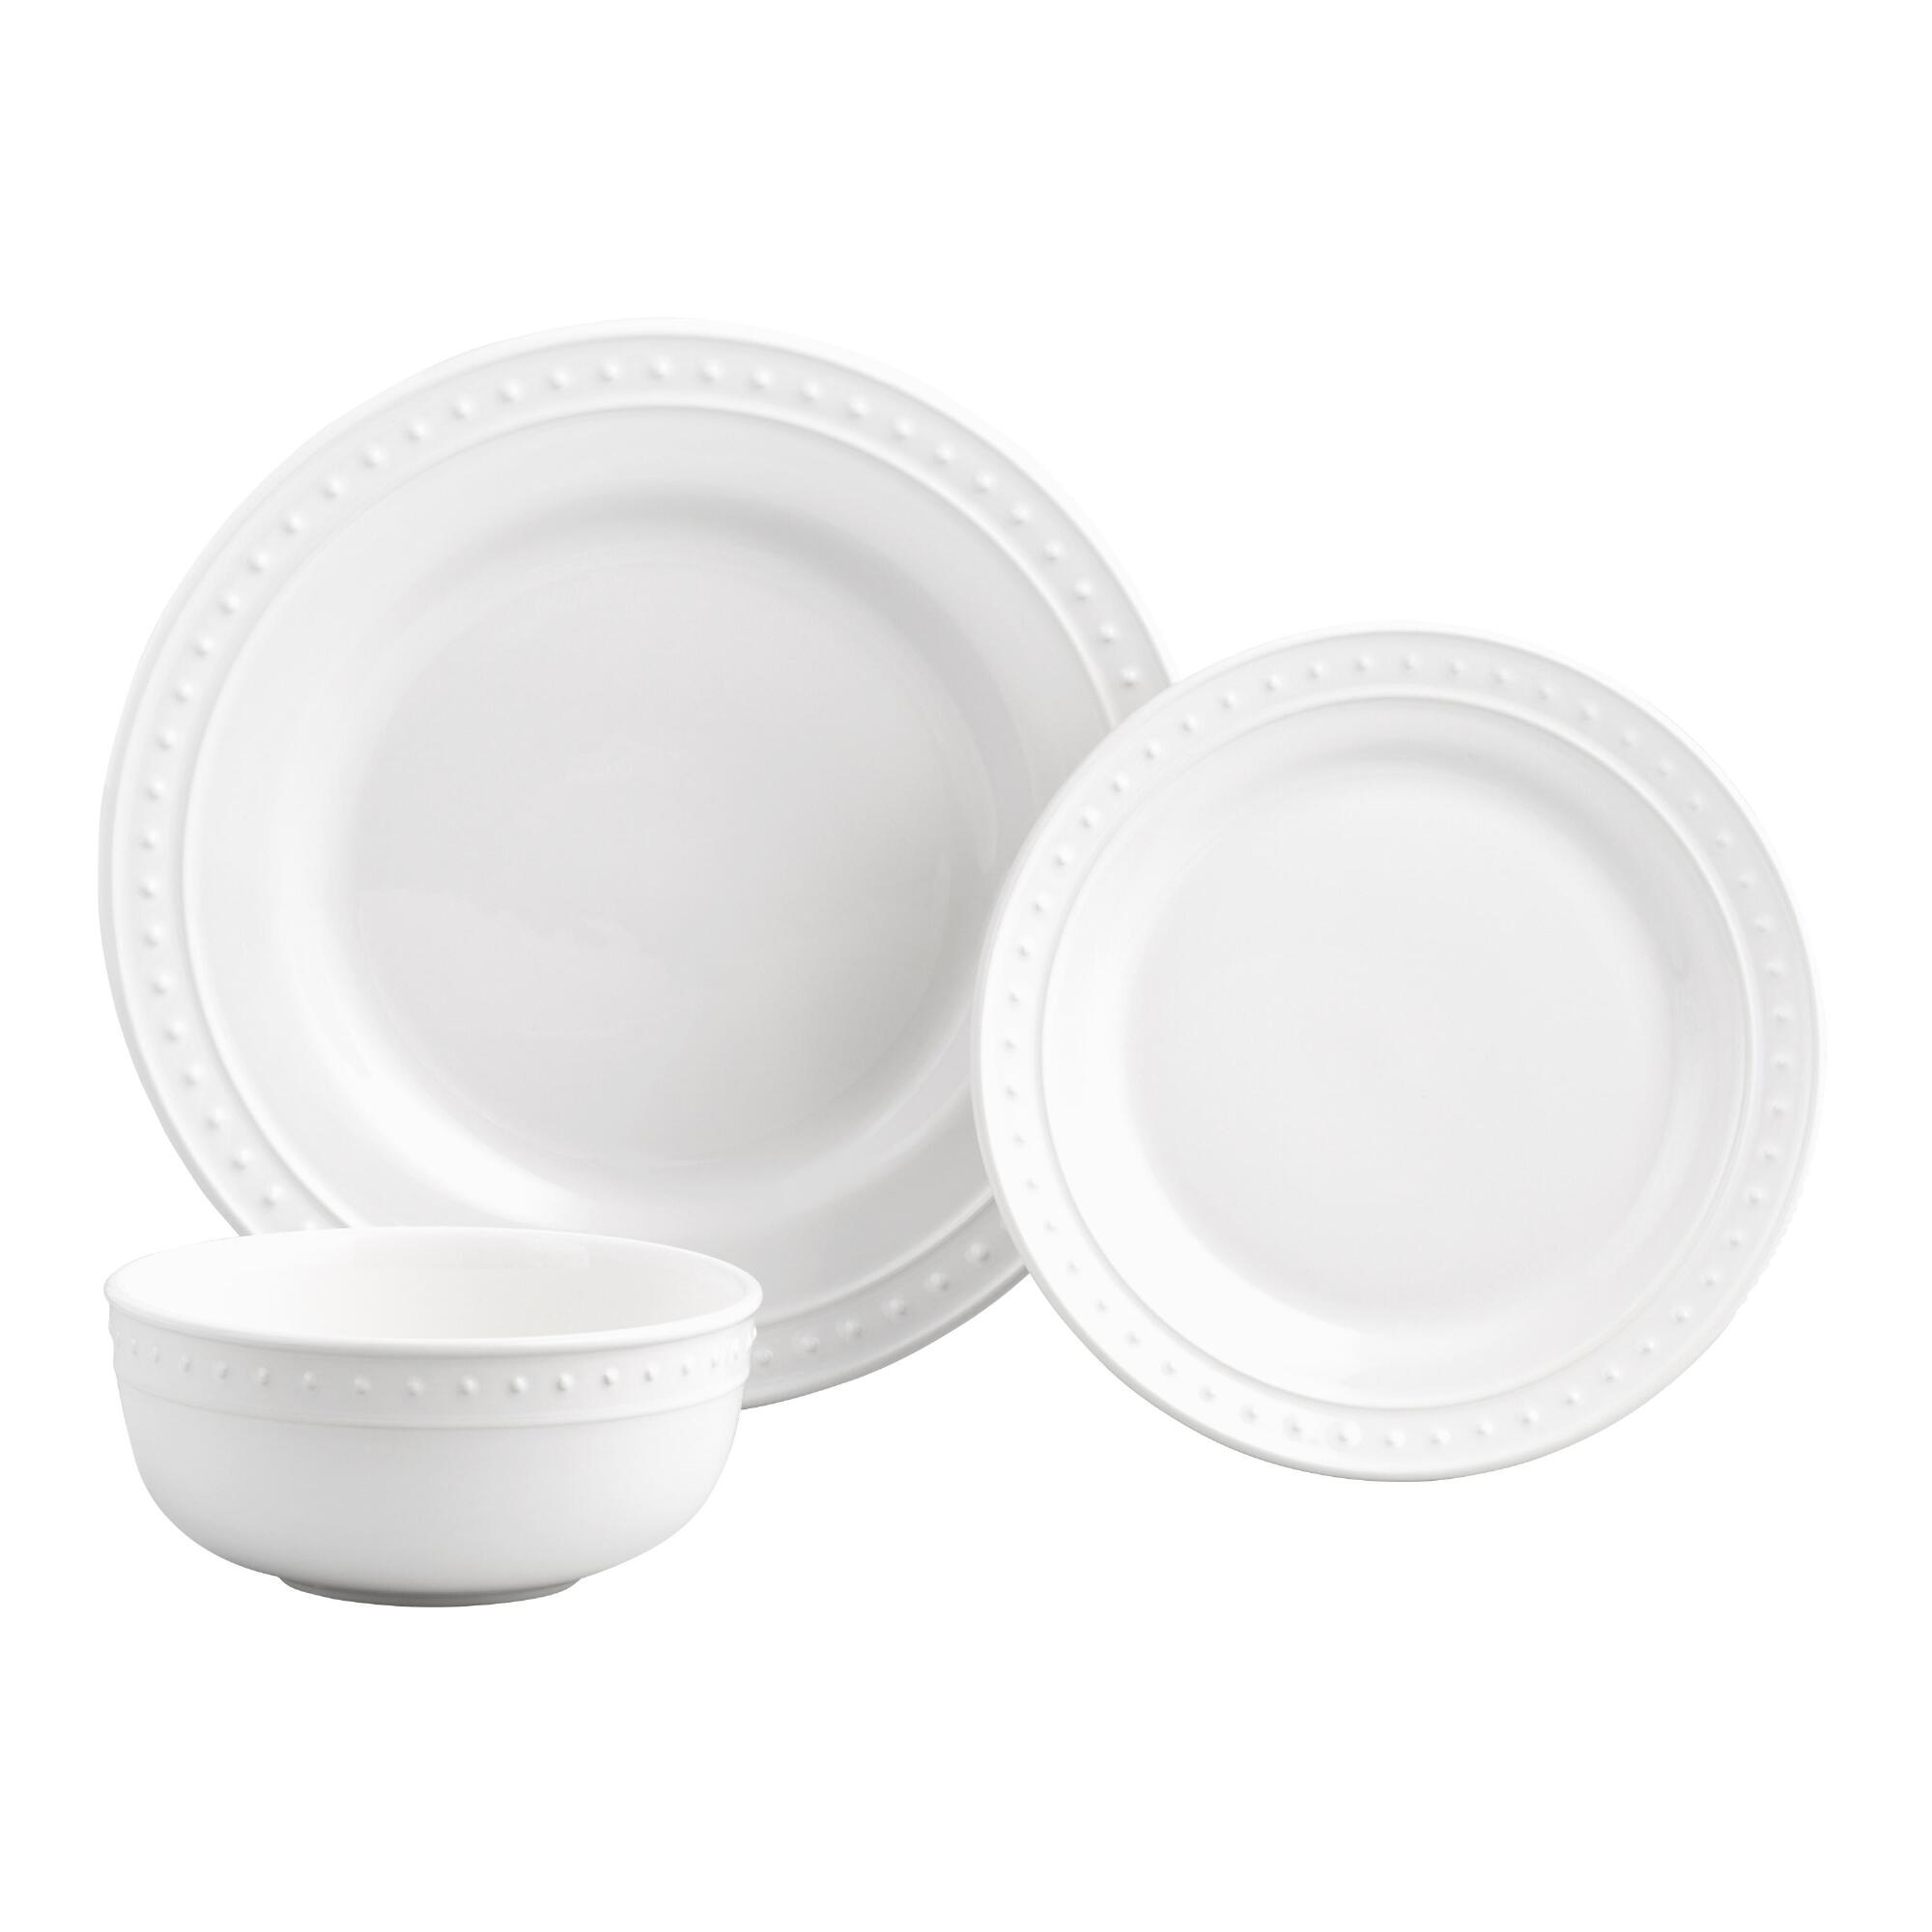 White Nantucket Dinnerware Collection by World Market